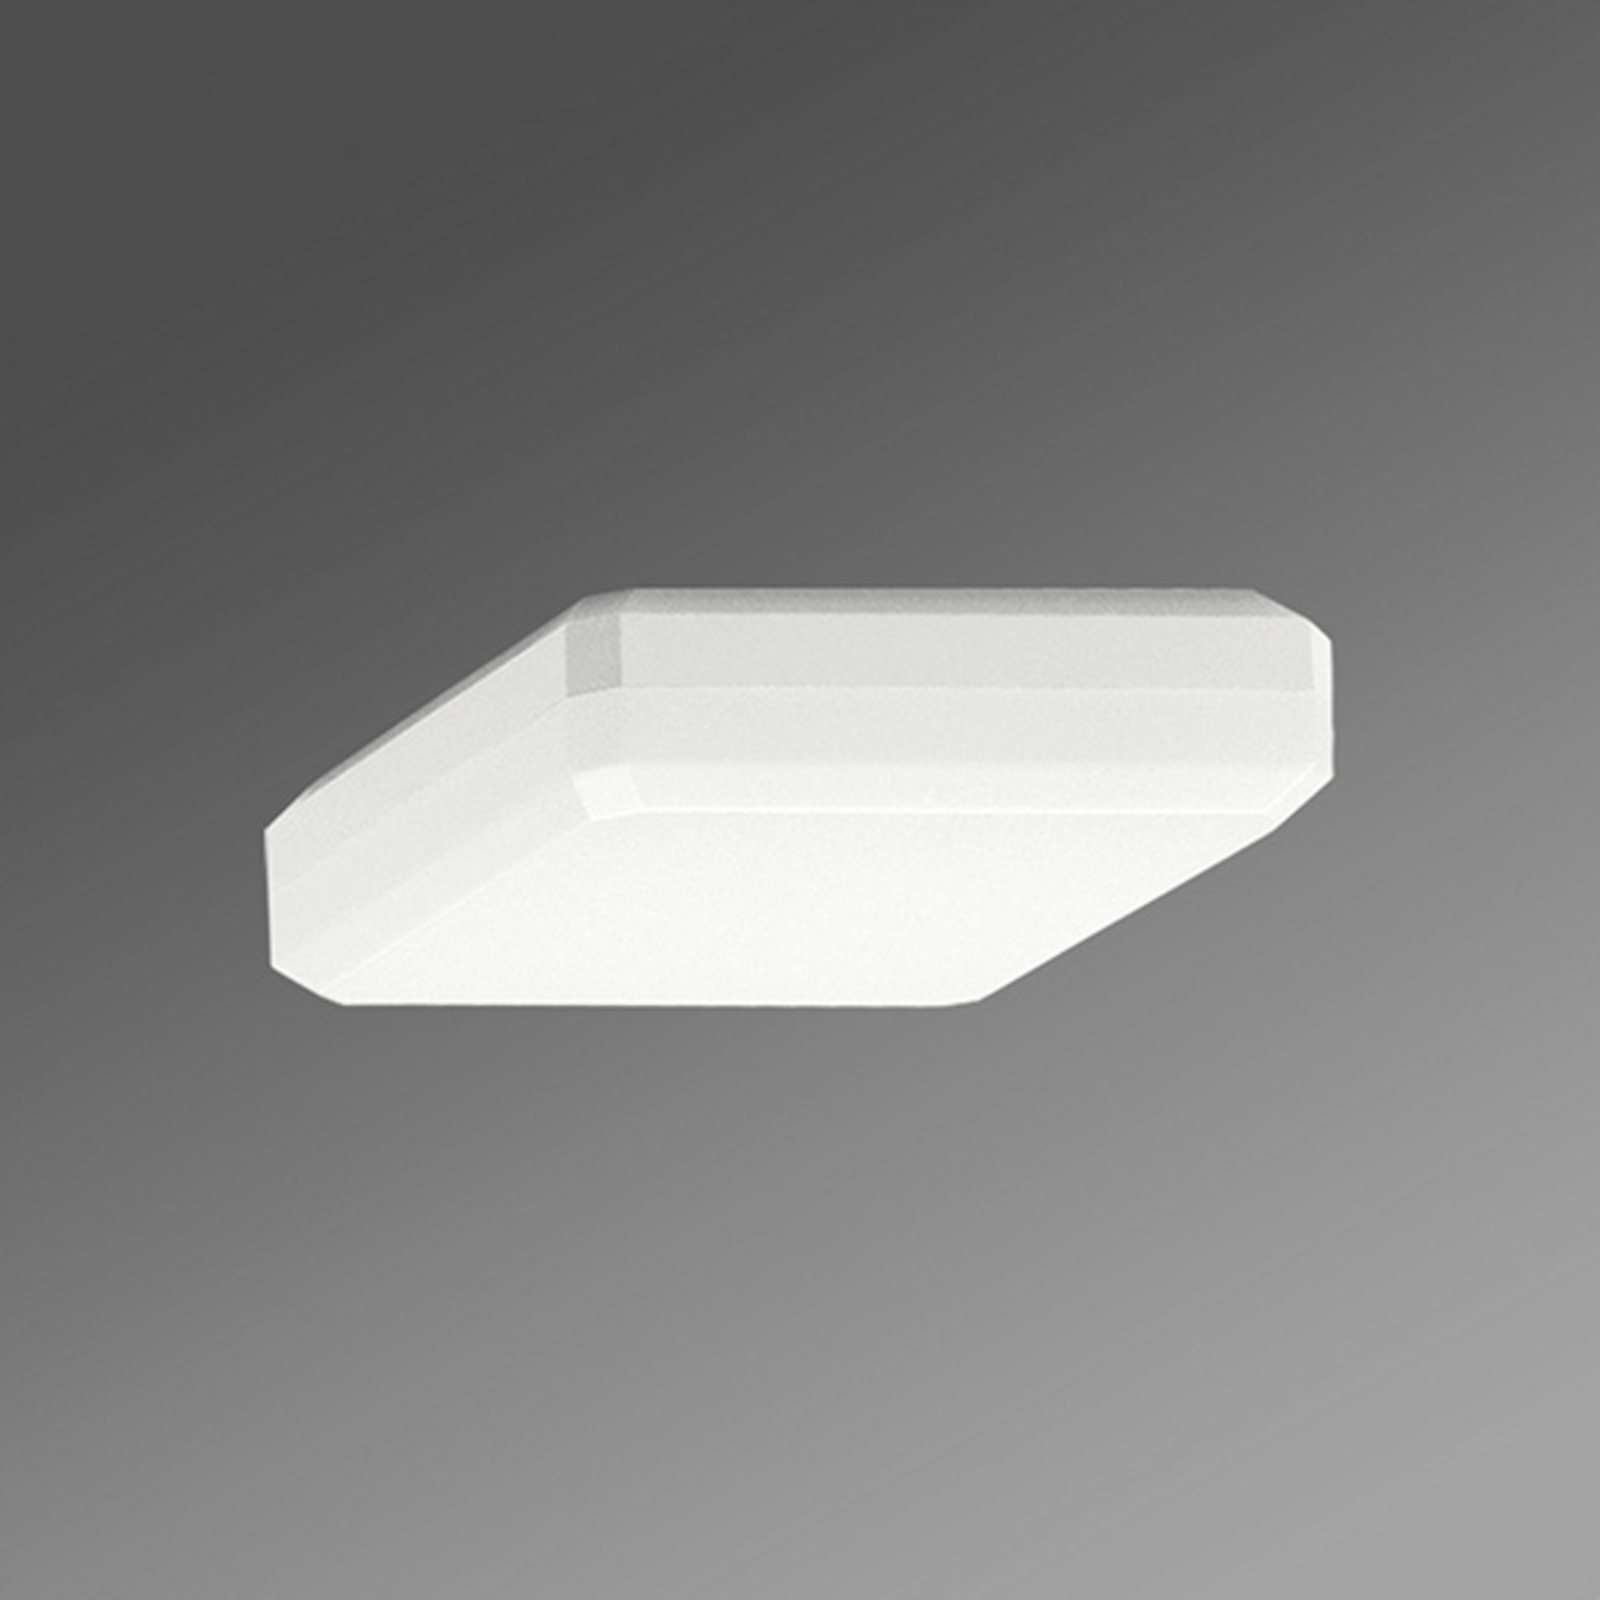 Quadratische Deckenanbaulampe WQL Diffusor opal uw